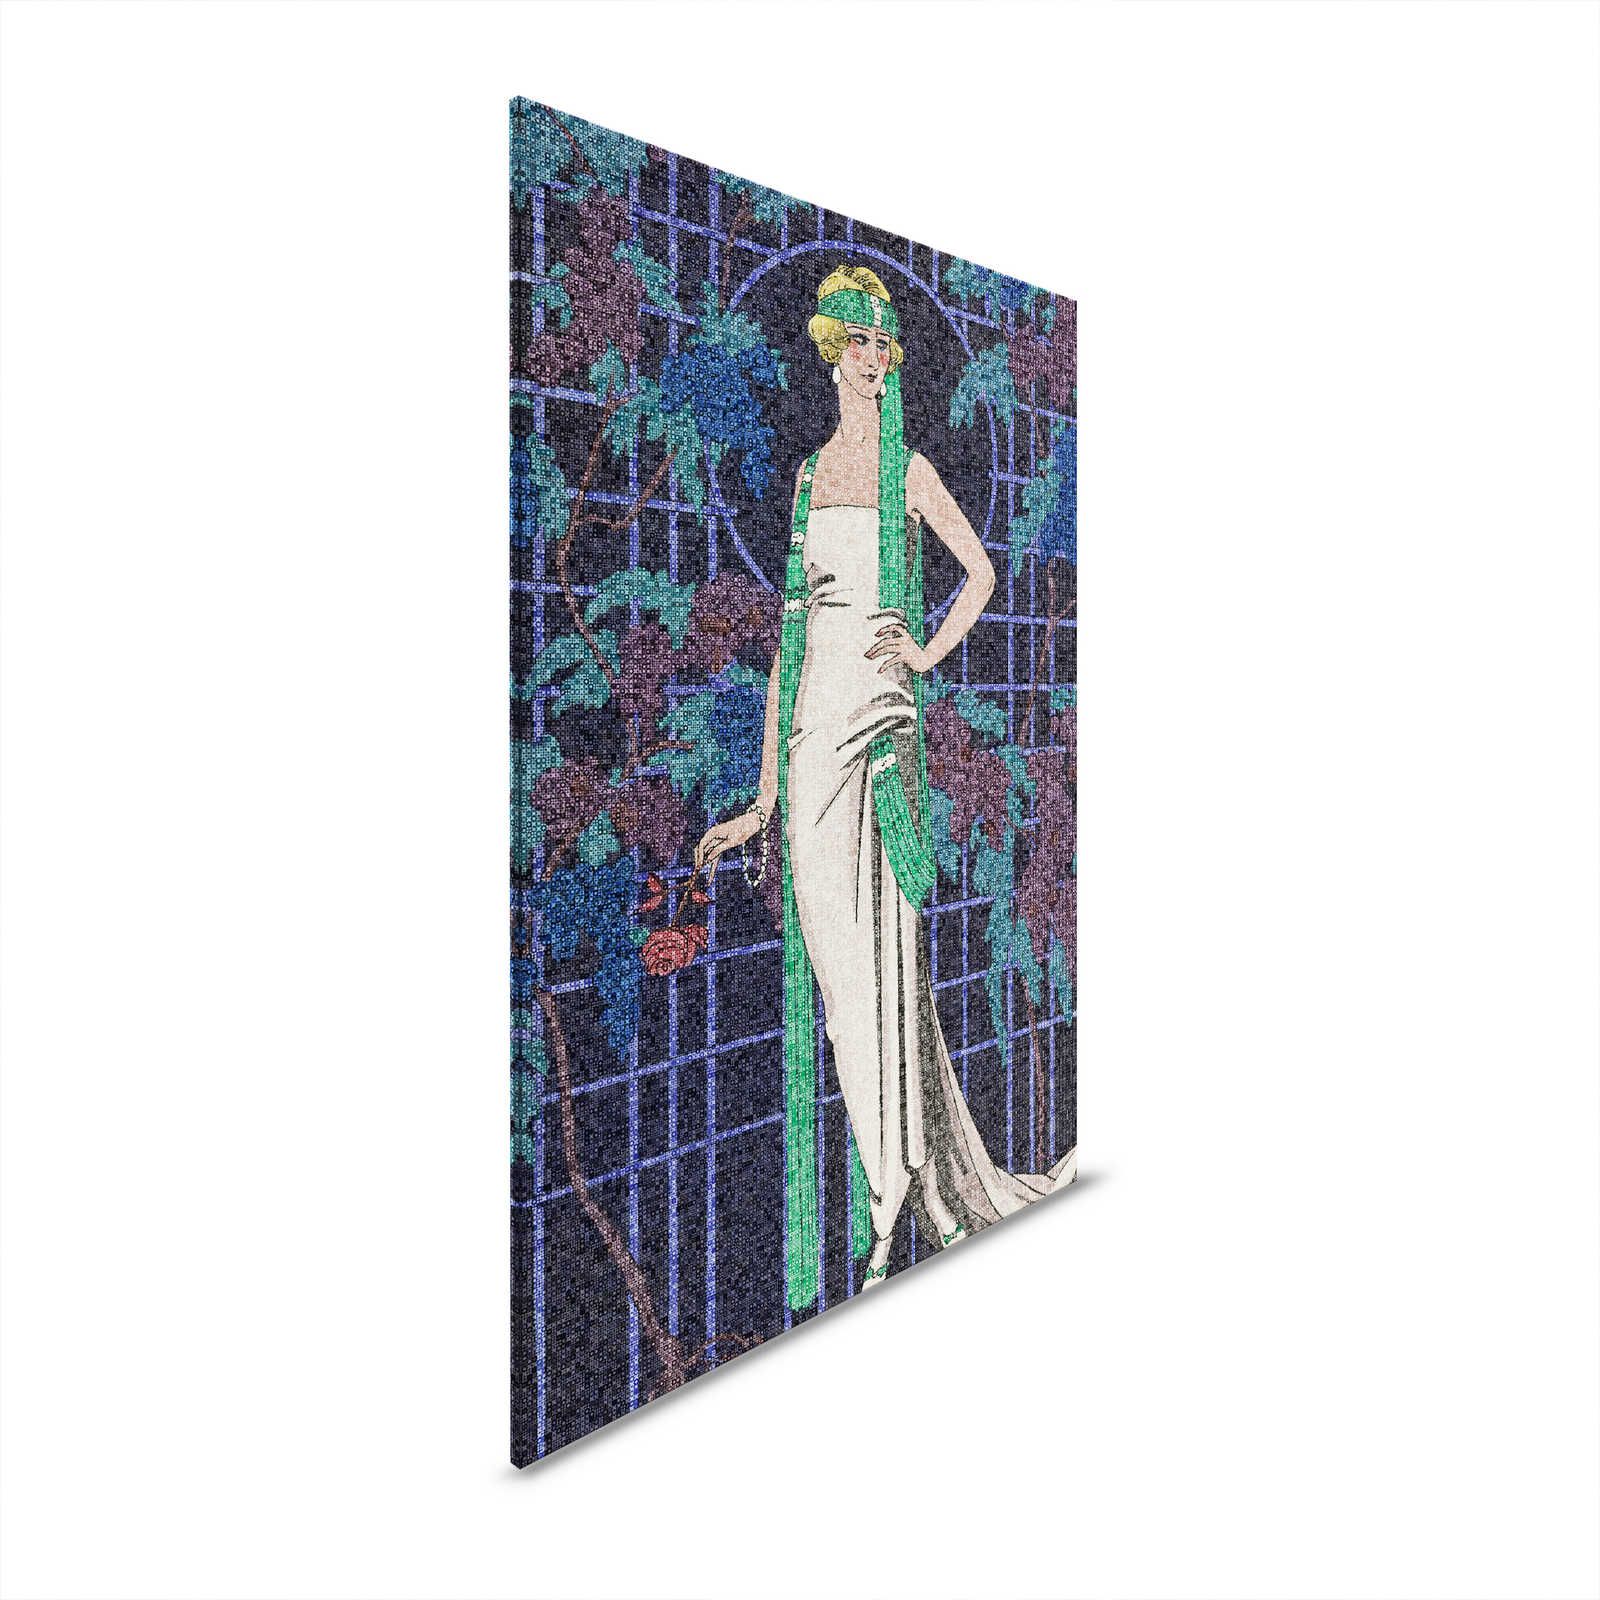 Scala 2 - Mosaic Canvas Painting Art Deco Women Motif 20s Style - 0.80 m x 1.20 m
